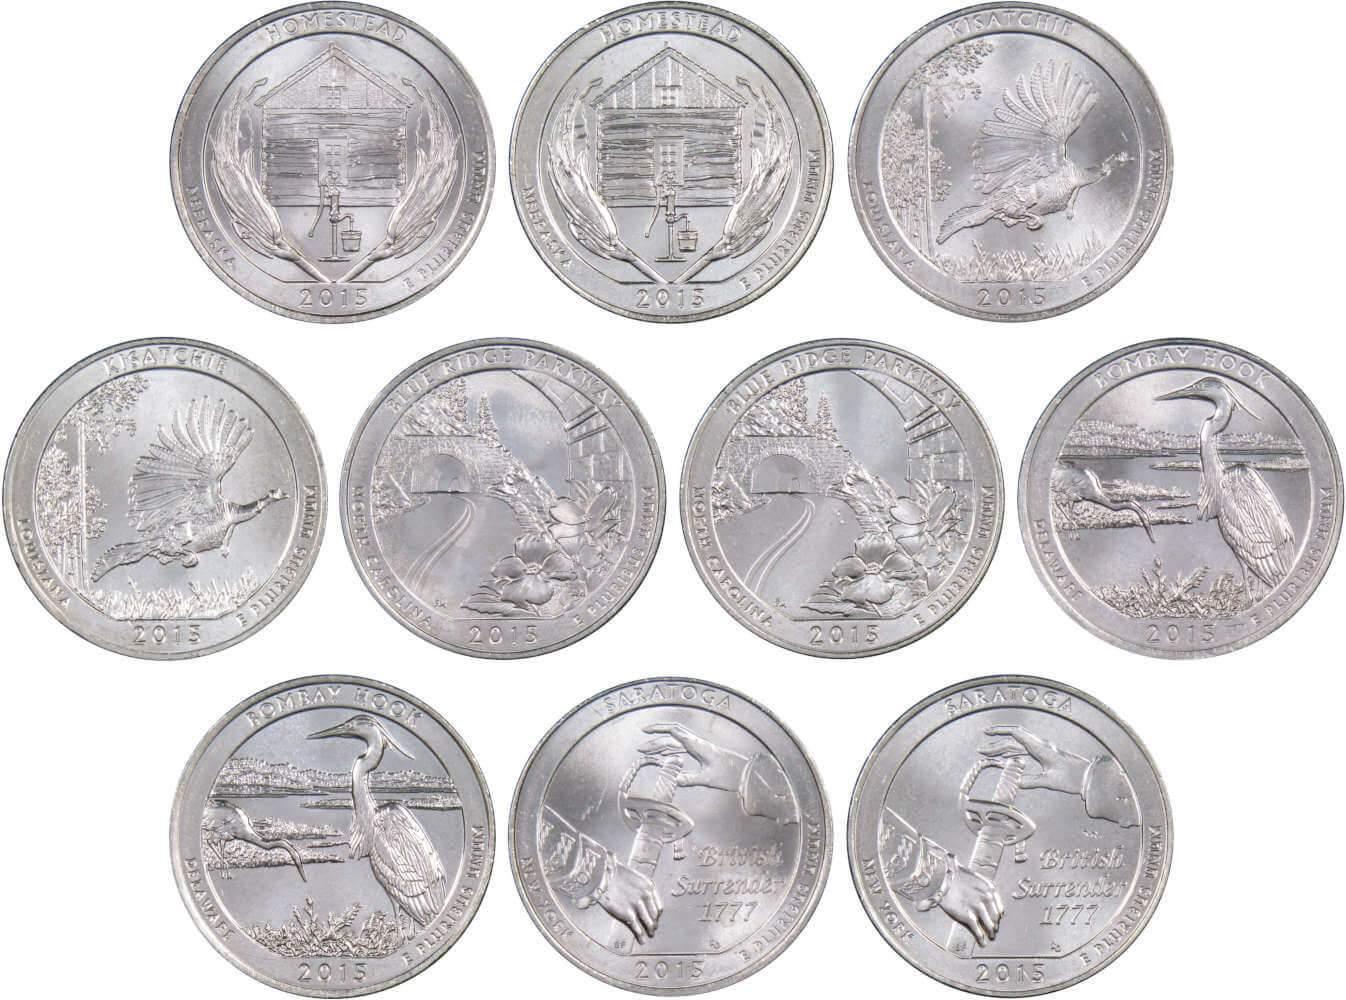 2015 P&D National Park Quarter 10 Coin Set Uncirculated Mint State 25c